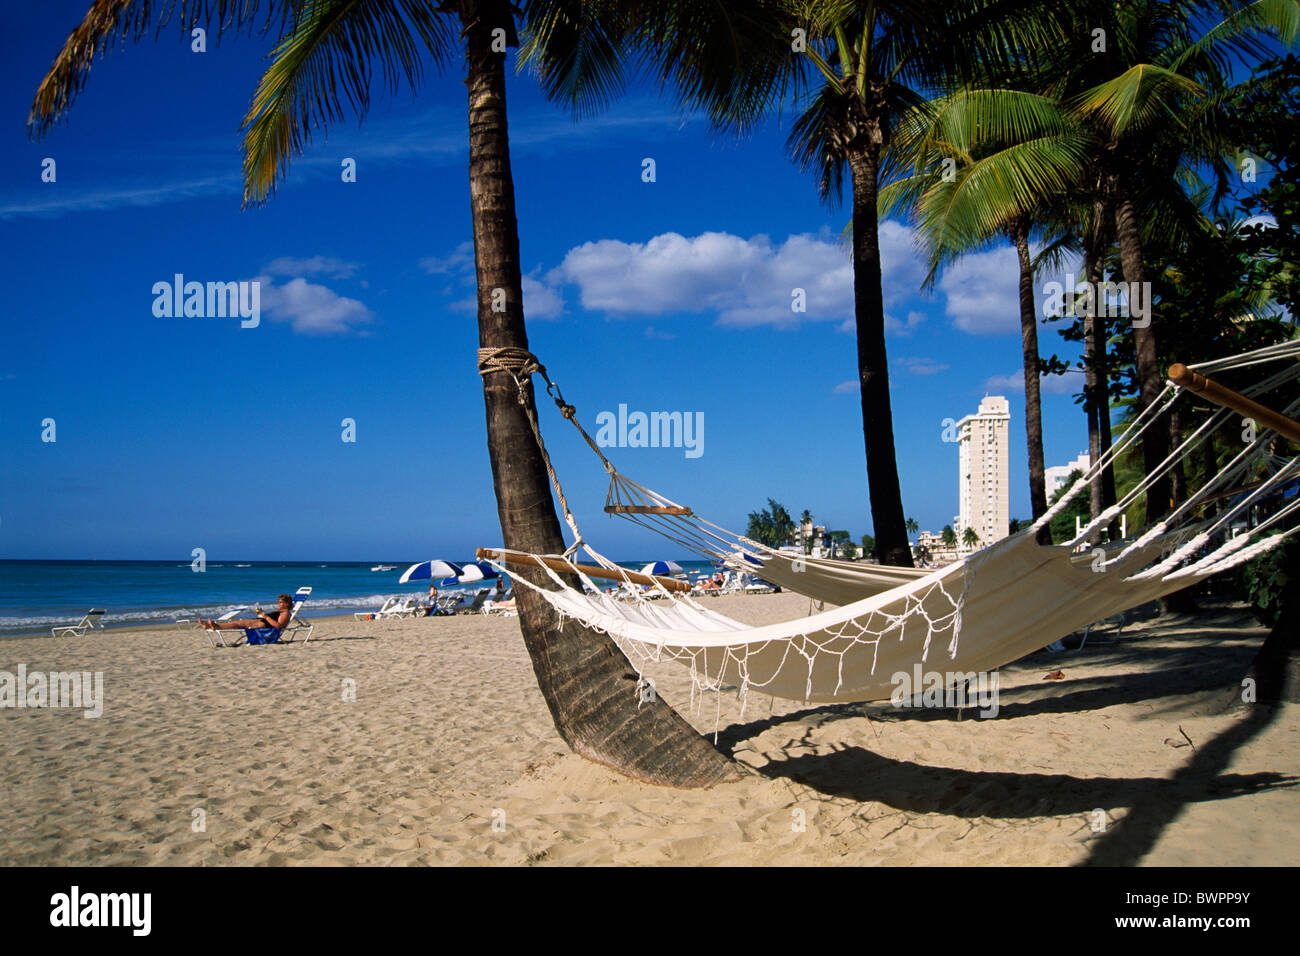 Puerto Rico Isla Verde Beach San Juan Caribbean island Greater Antilles beach palm trees hammock holiday vac Stock Photo